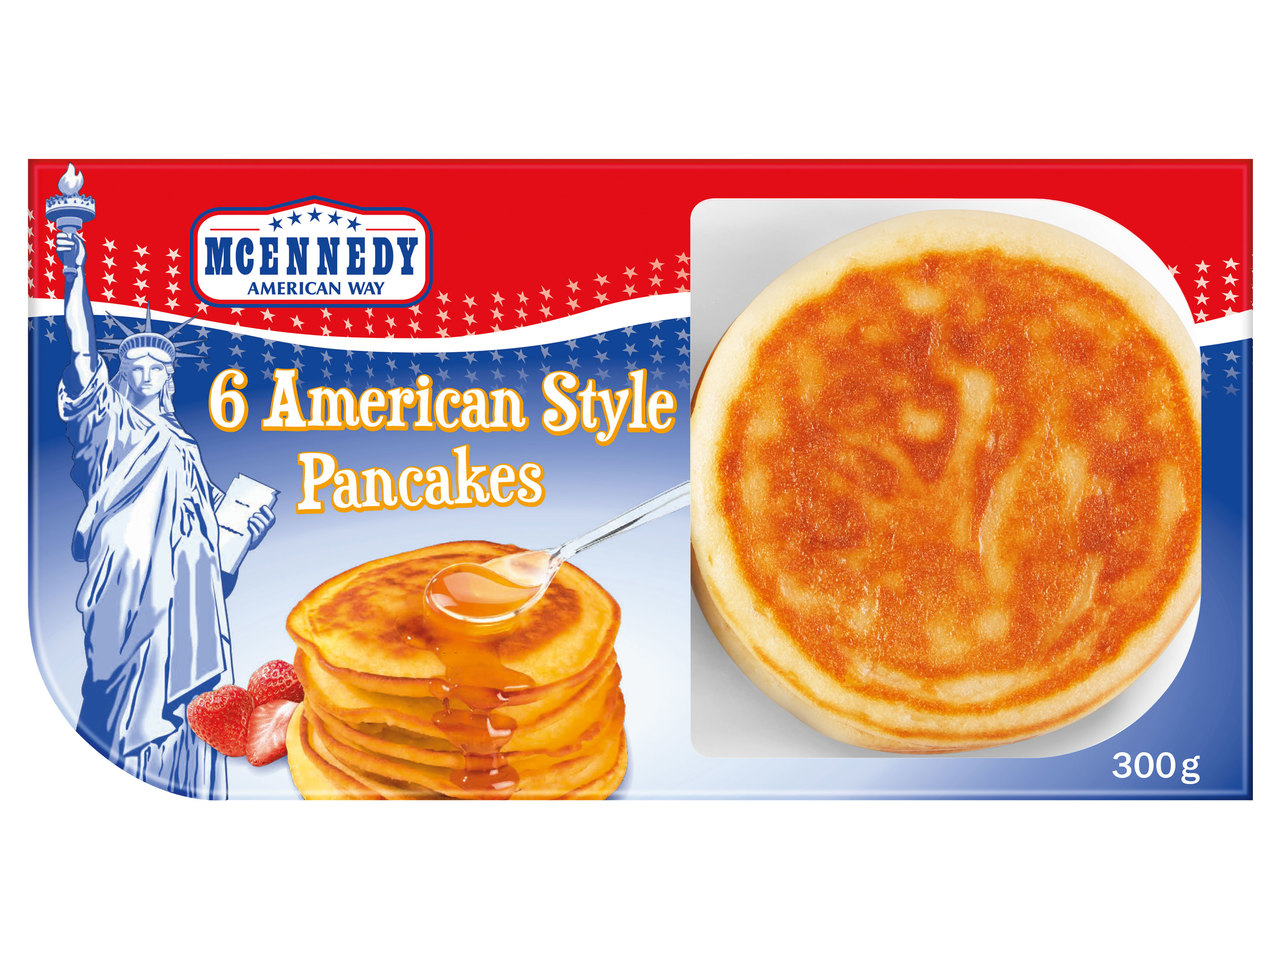 MCENNEDY Pancakes